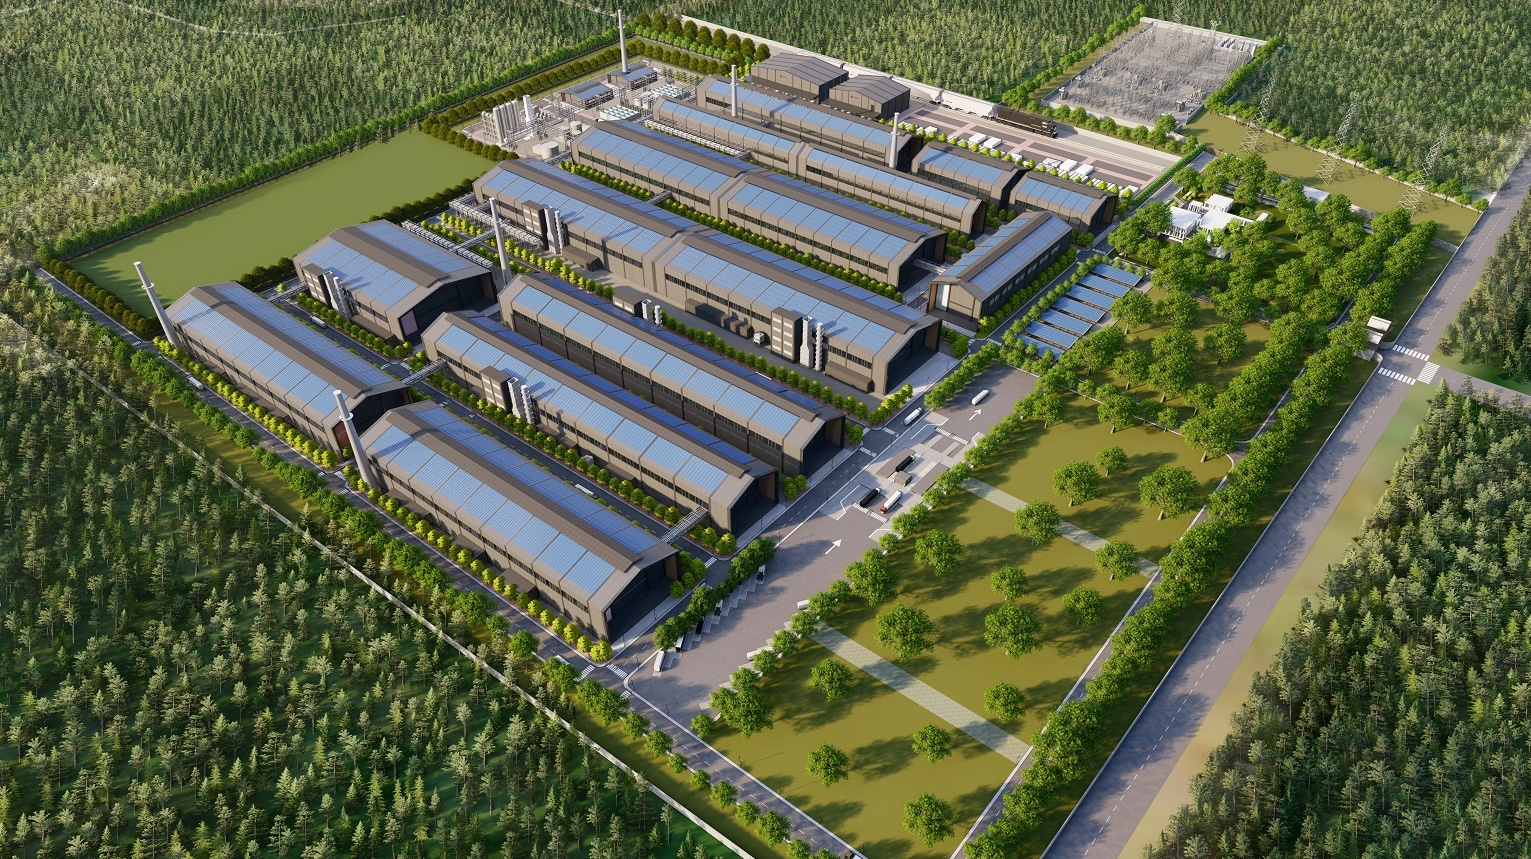 EAM invests $650M manufacturing facility in North Carolina